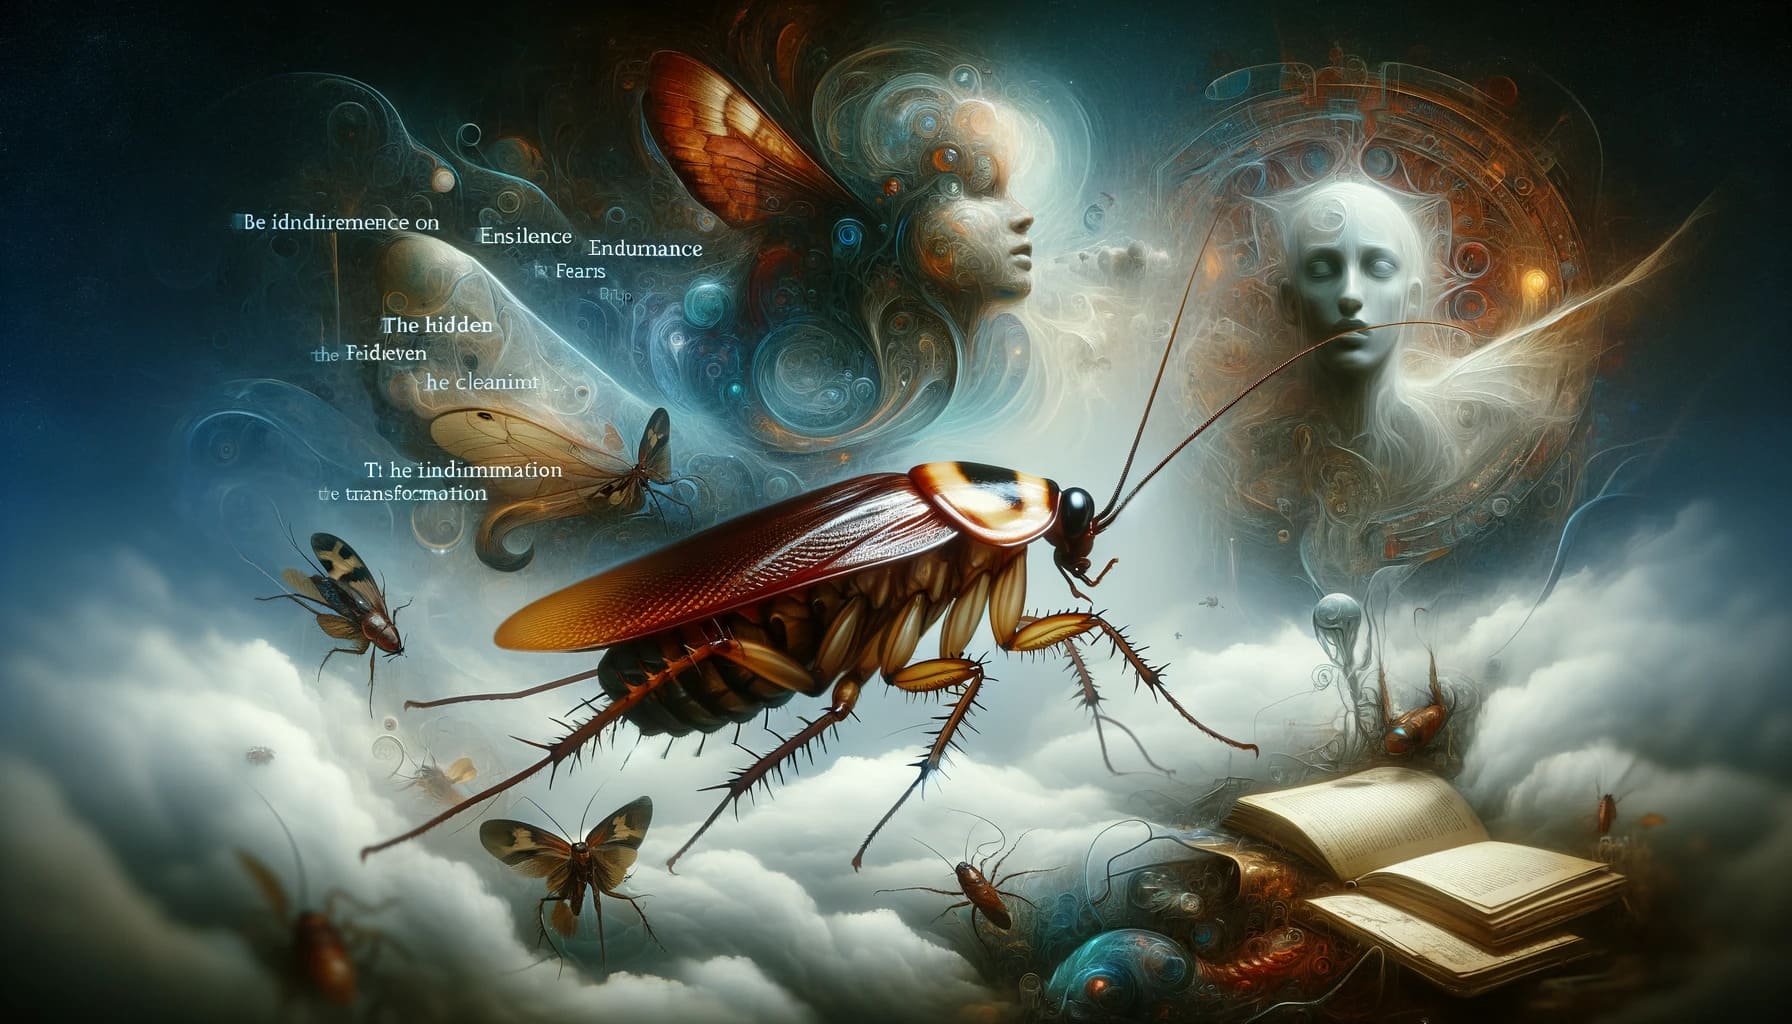 symbolic representation of cockroaches in a dream setting